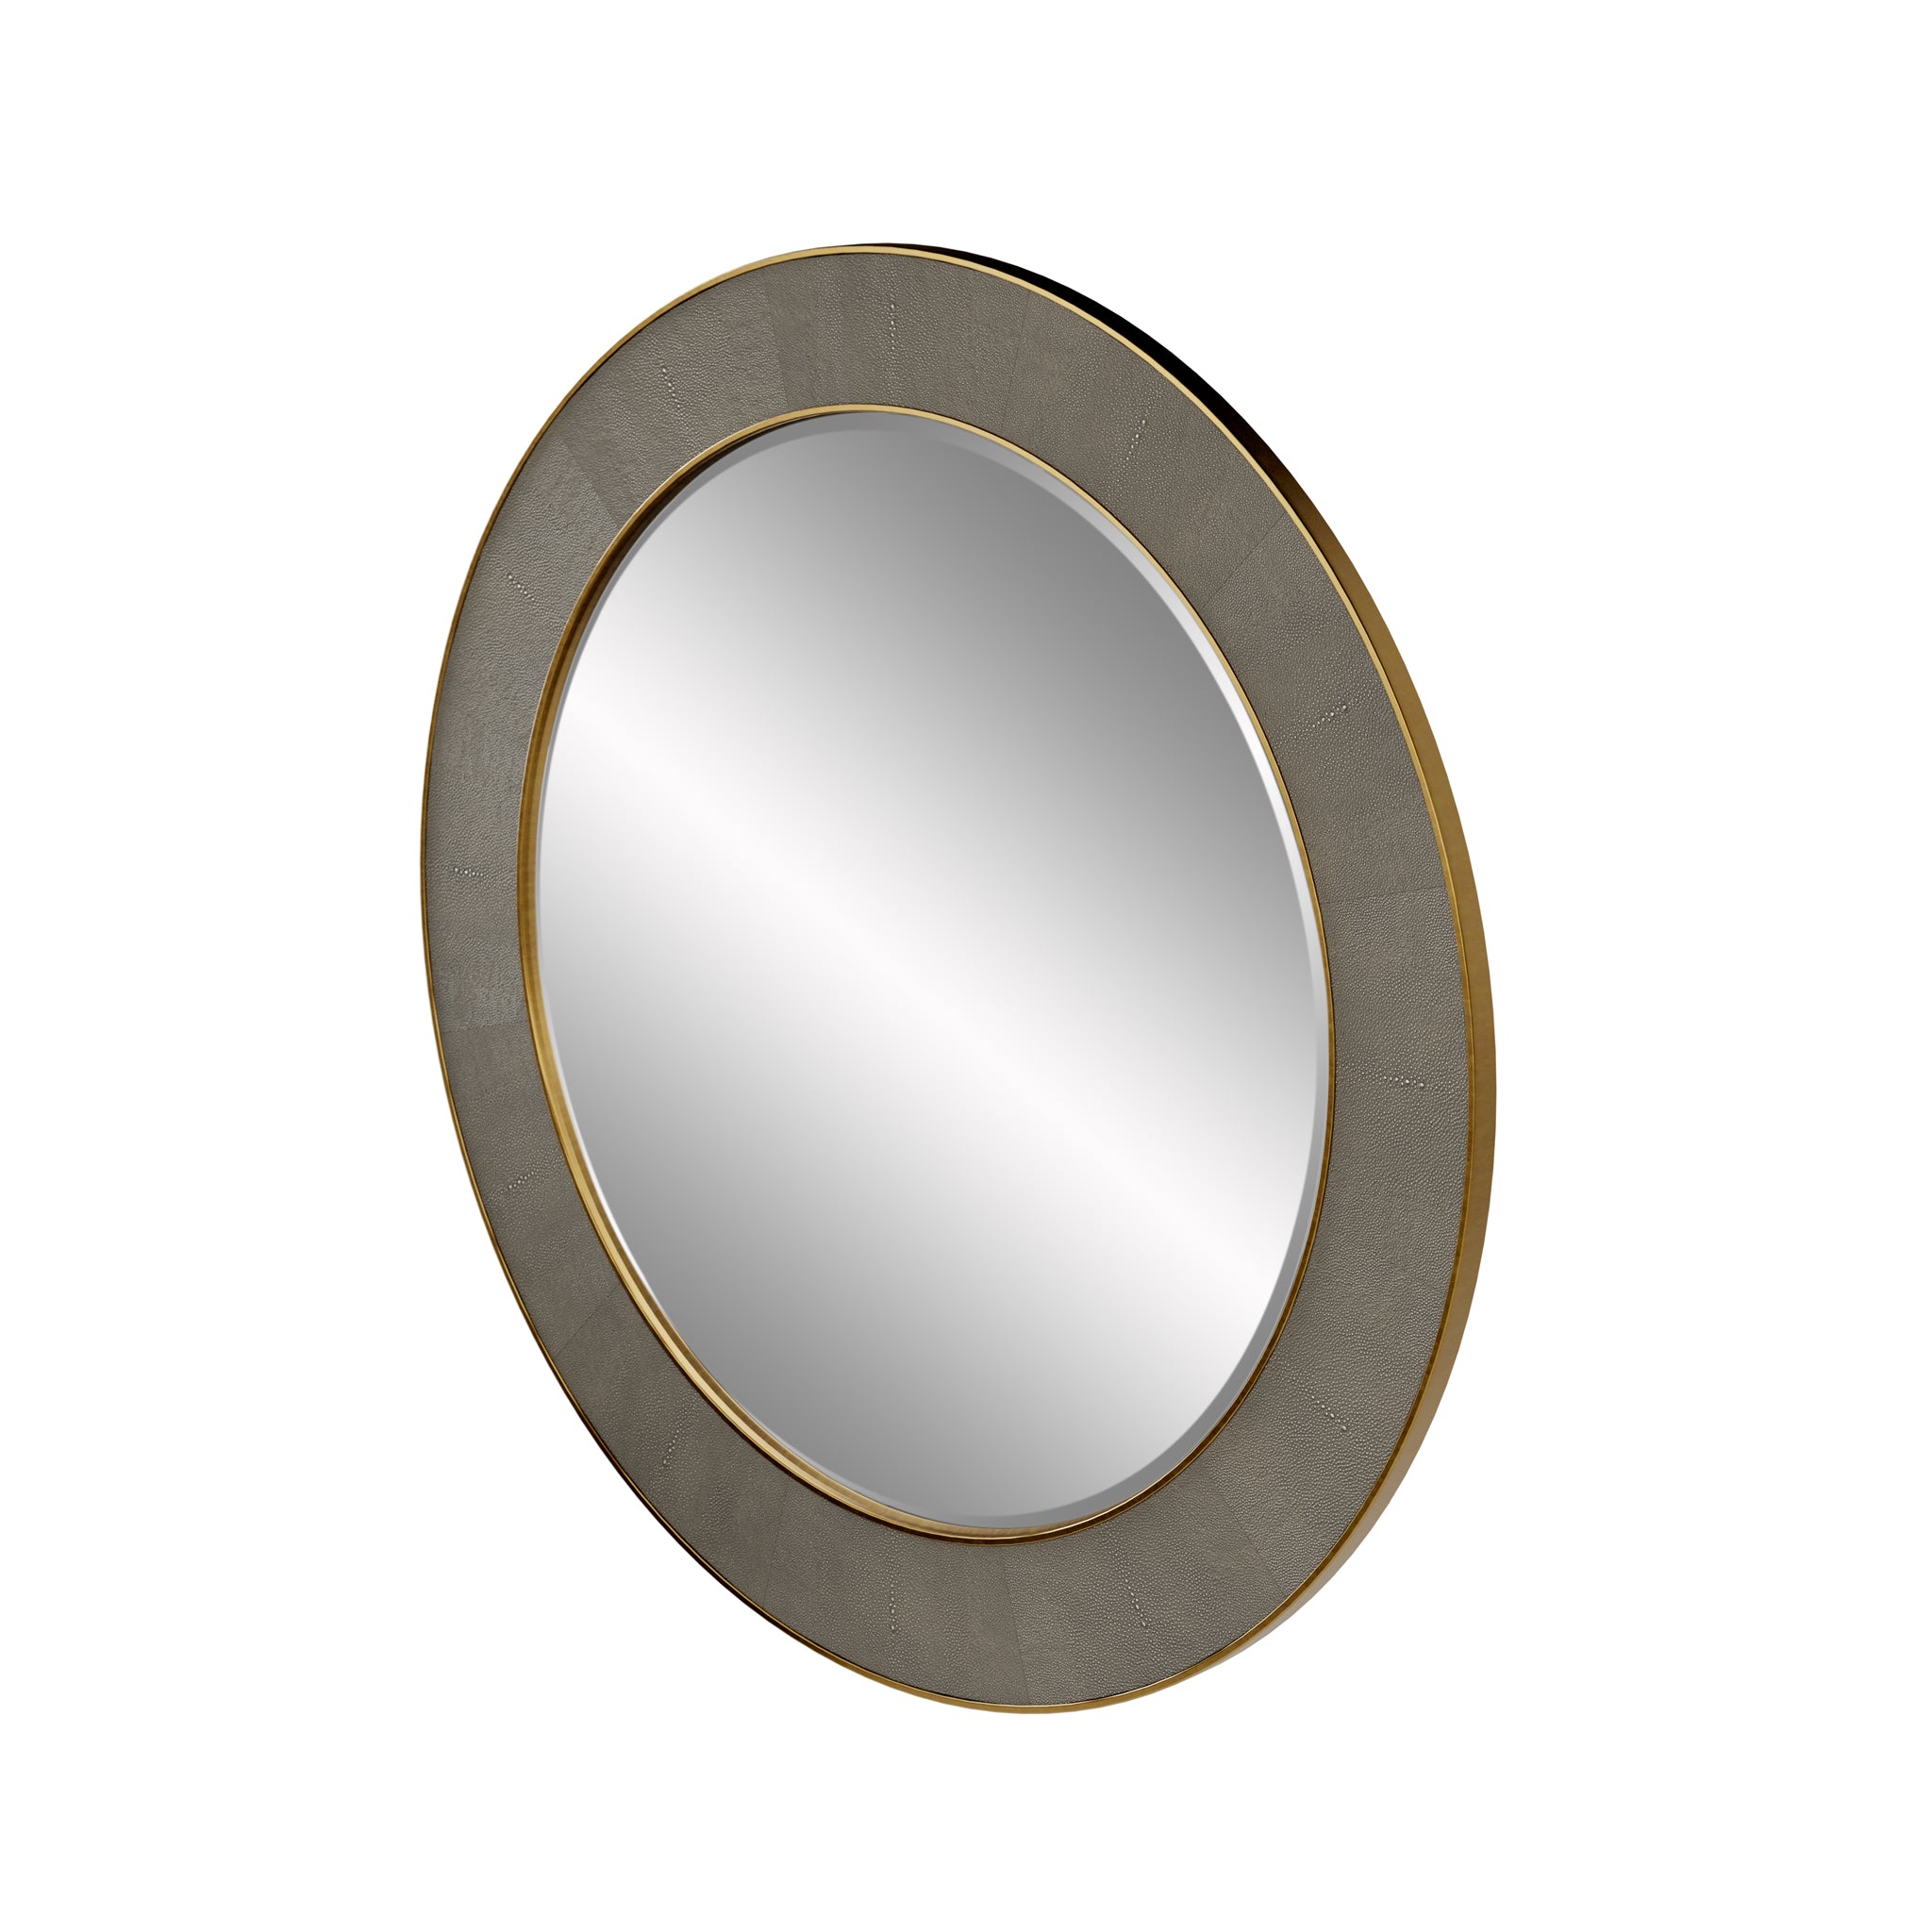 Hampton Mirror, Round Grey Shagreen